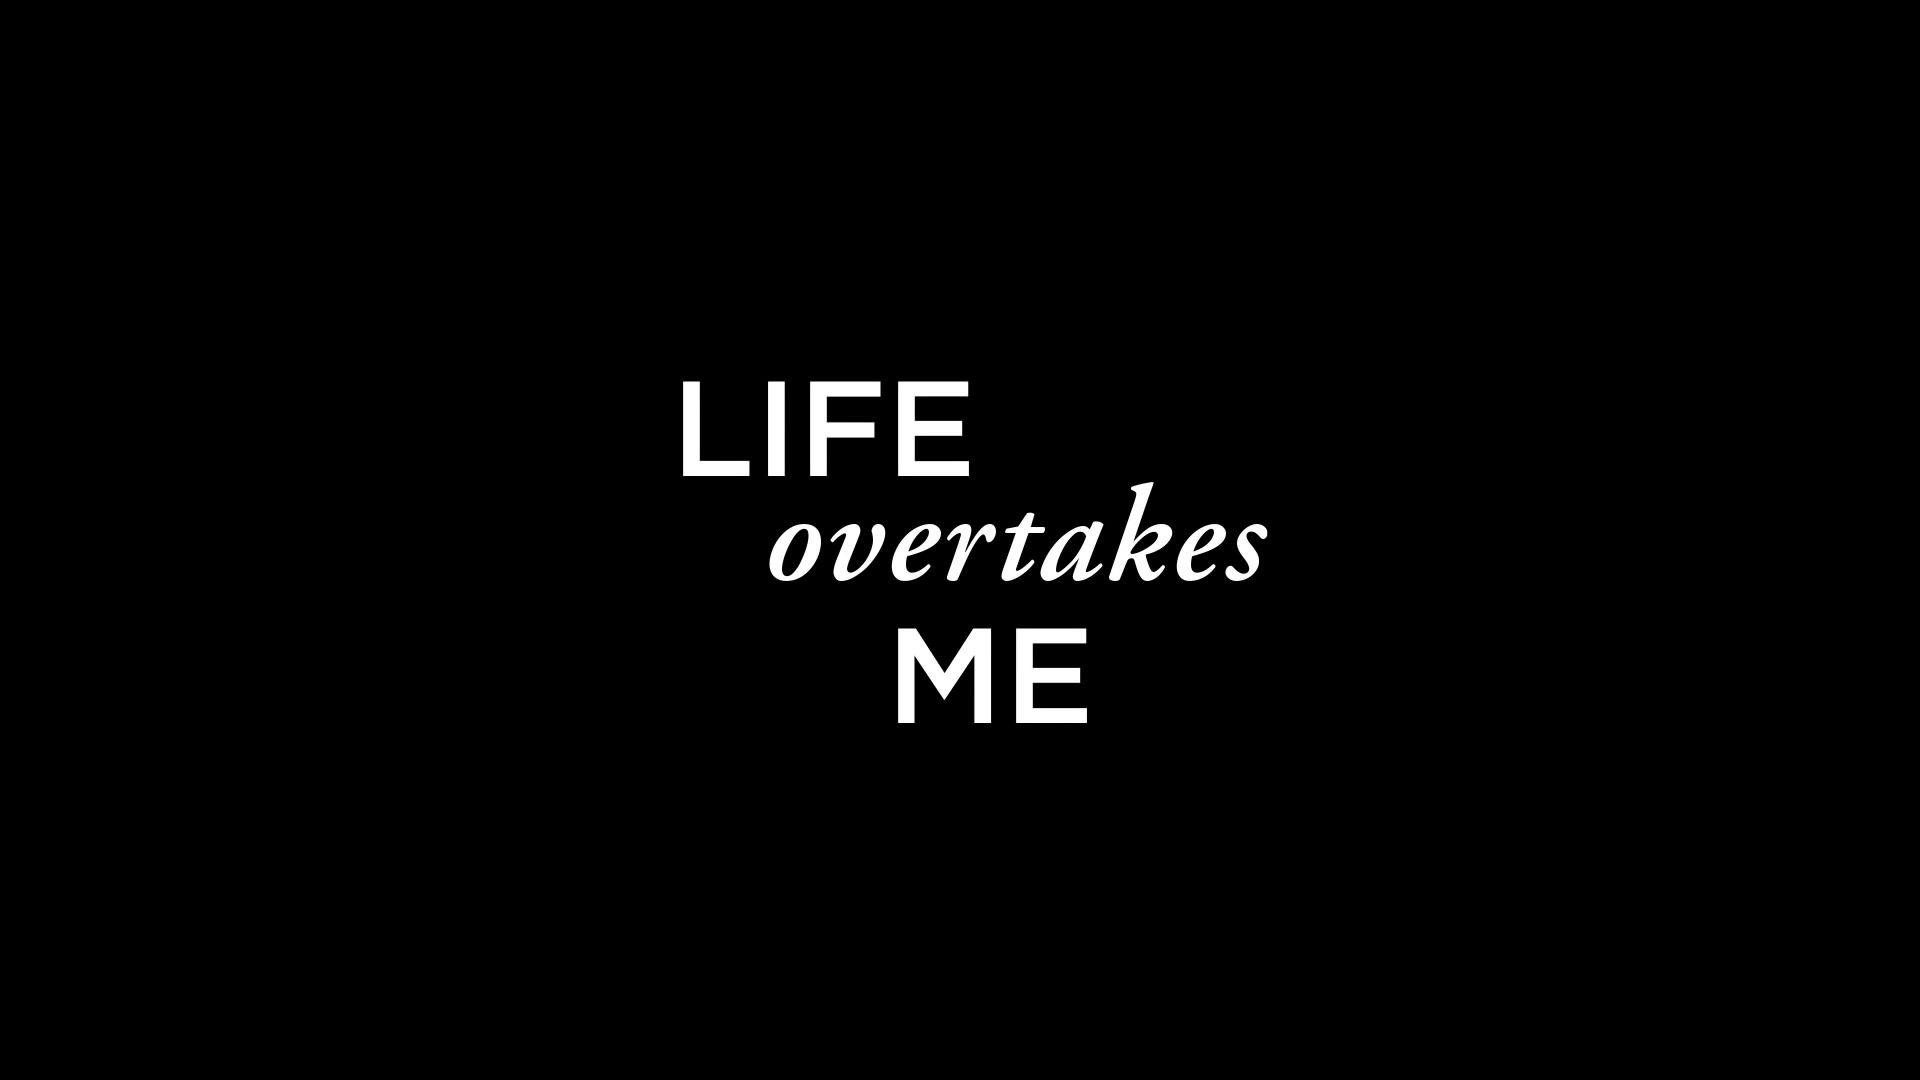 Life Overtakes Me Netflix Trailer, Coming to Netflix in June, Best Netflix Documentaries, Netflix Trailers, New Netflix Shows